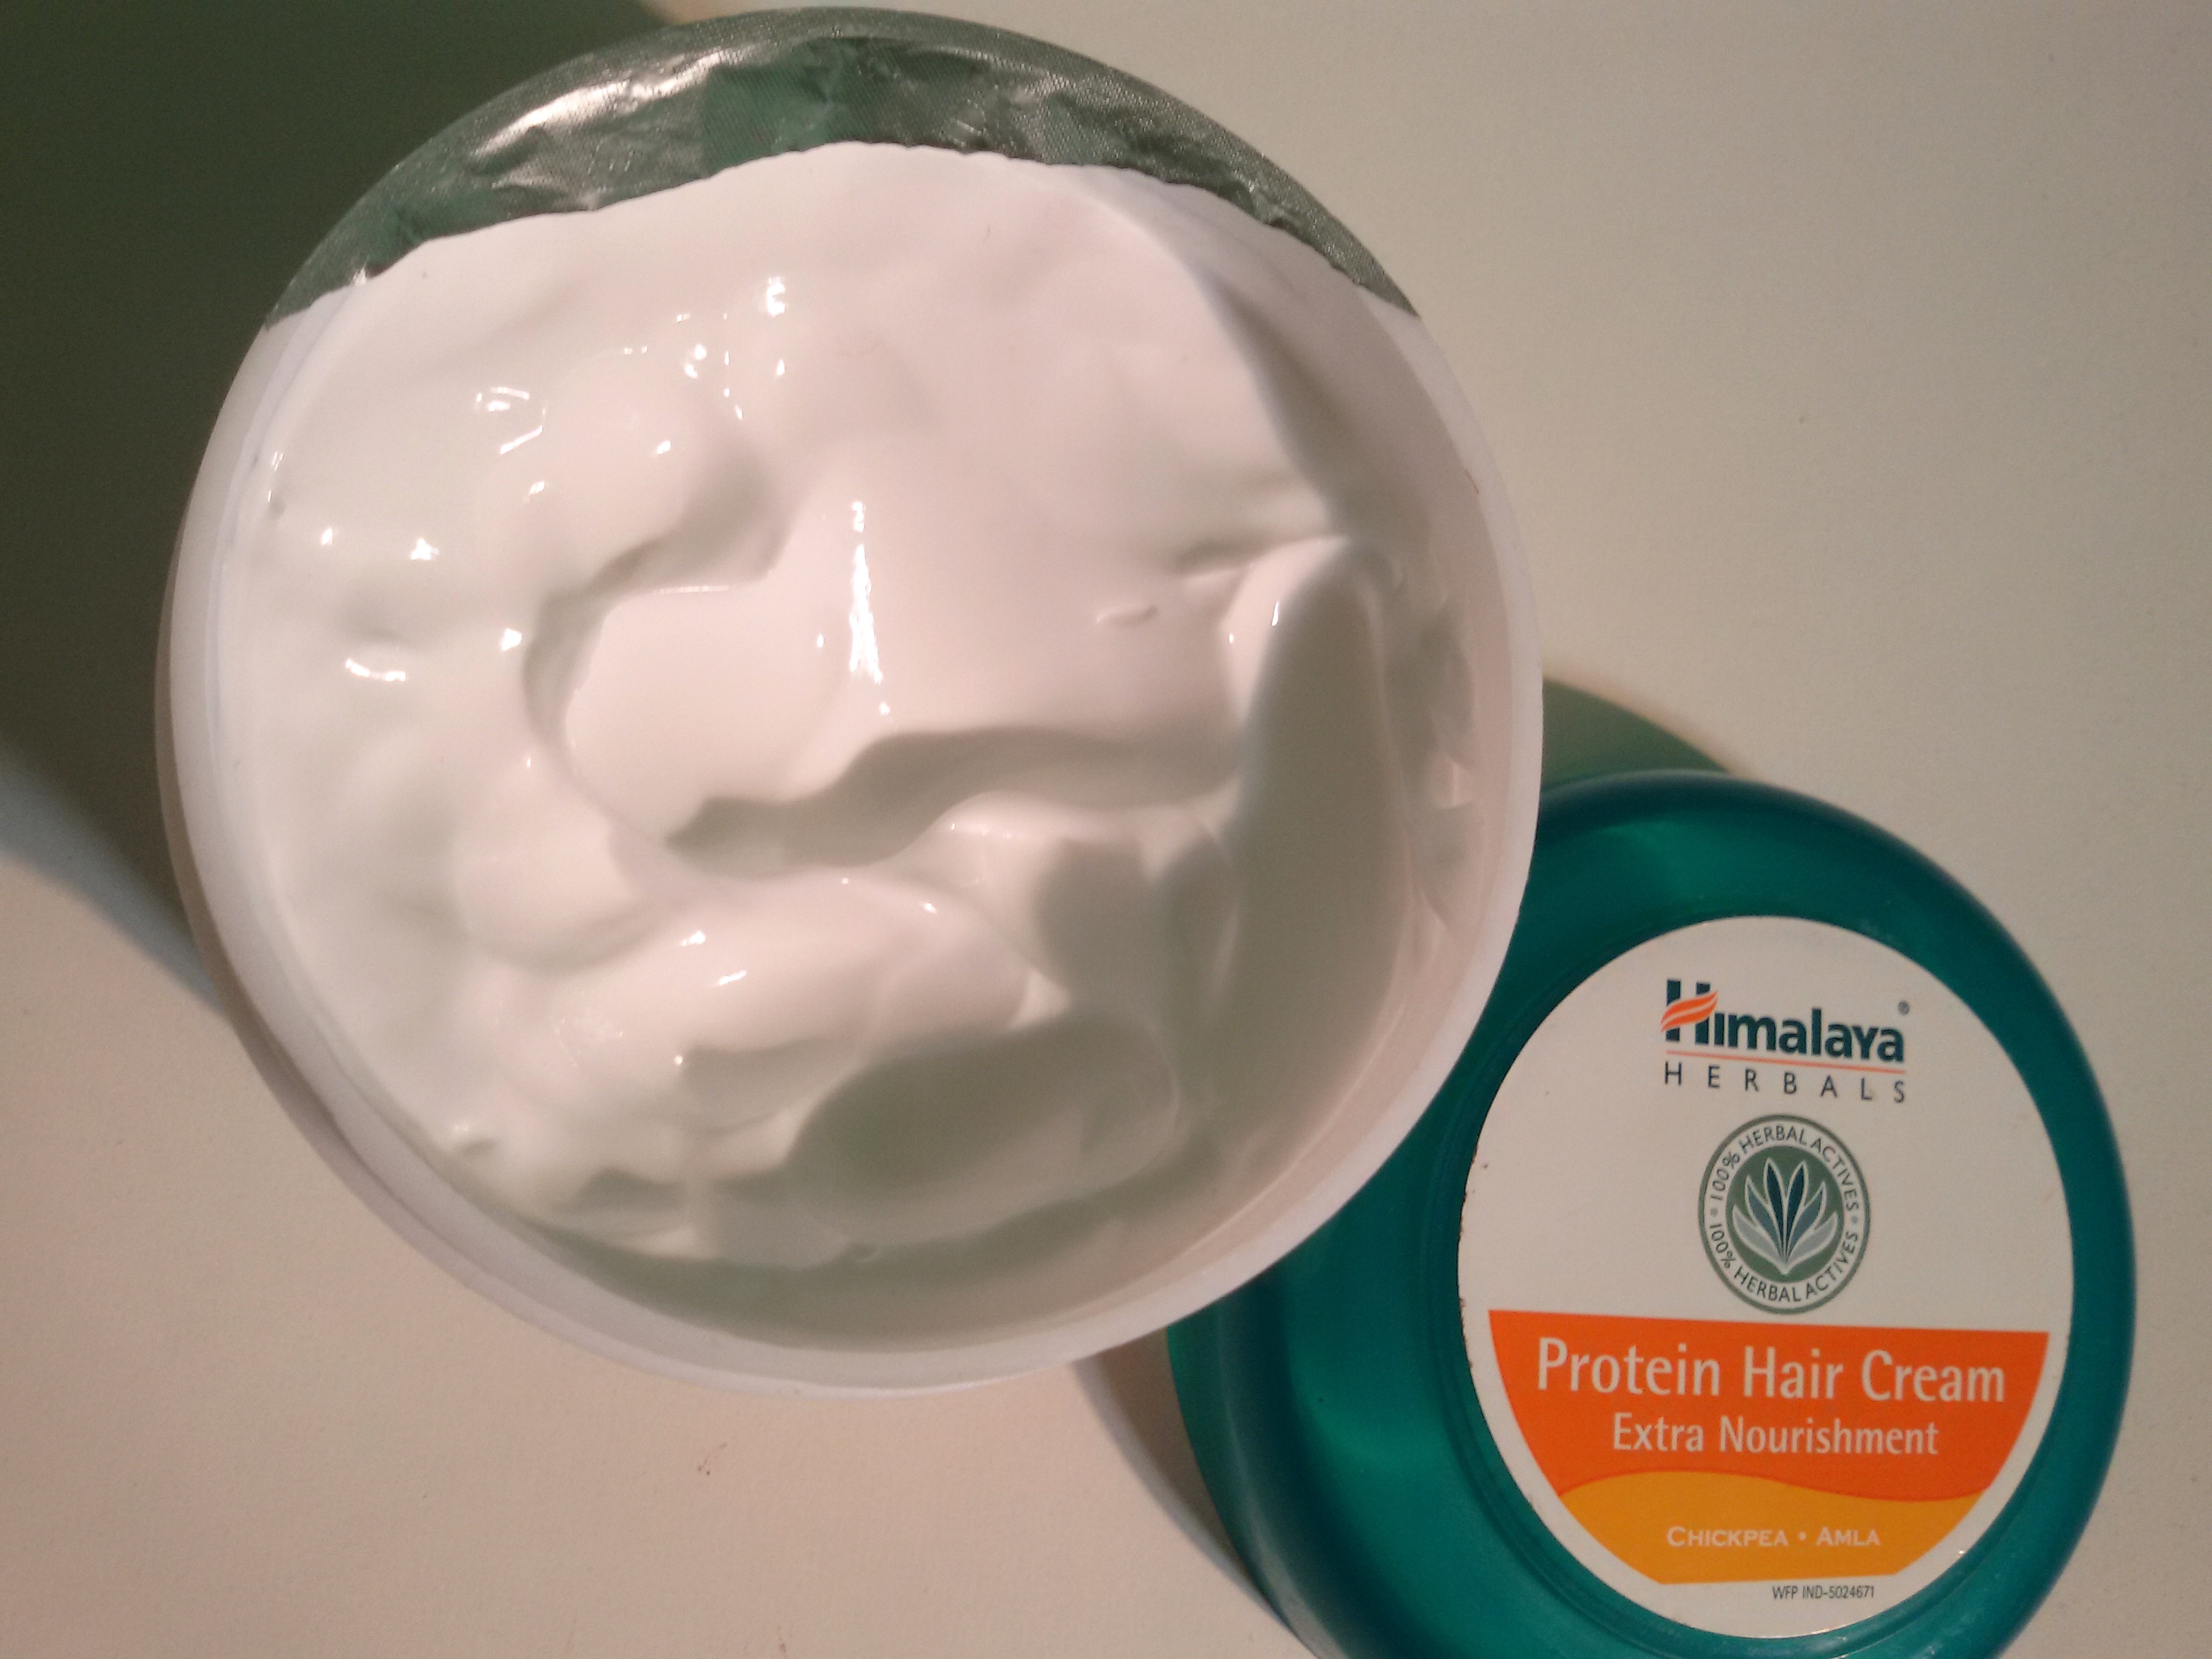 Himalaya Herbals Protein Hair Cream  Review  Paperblog